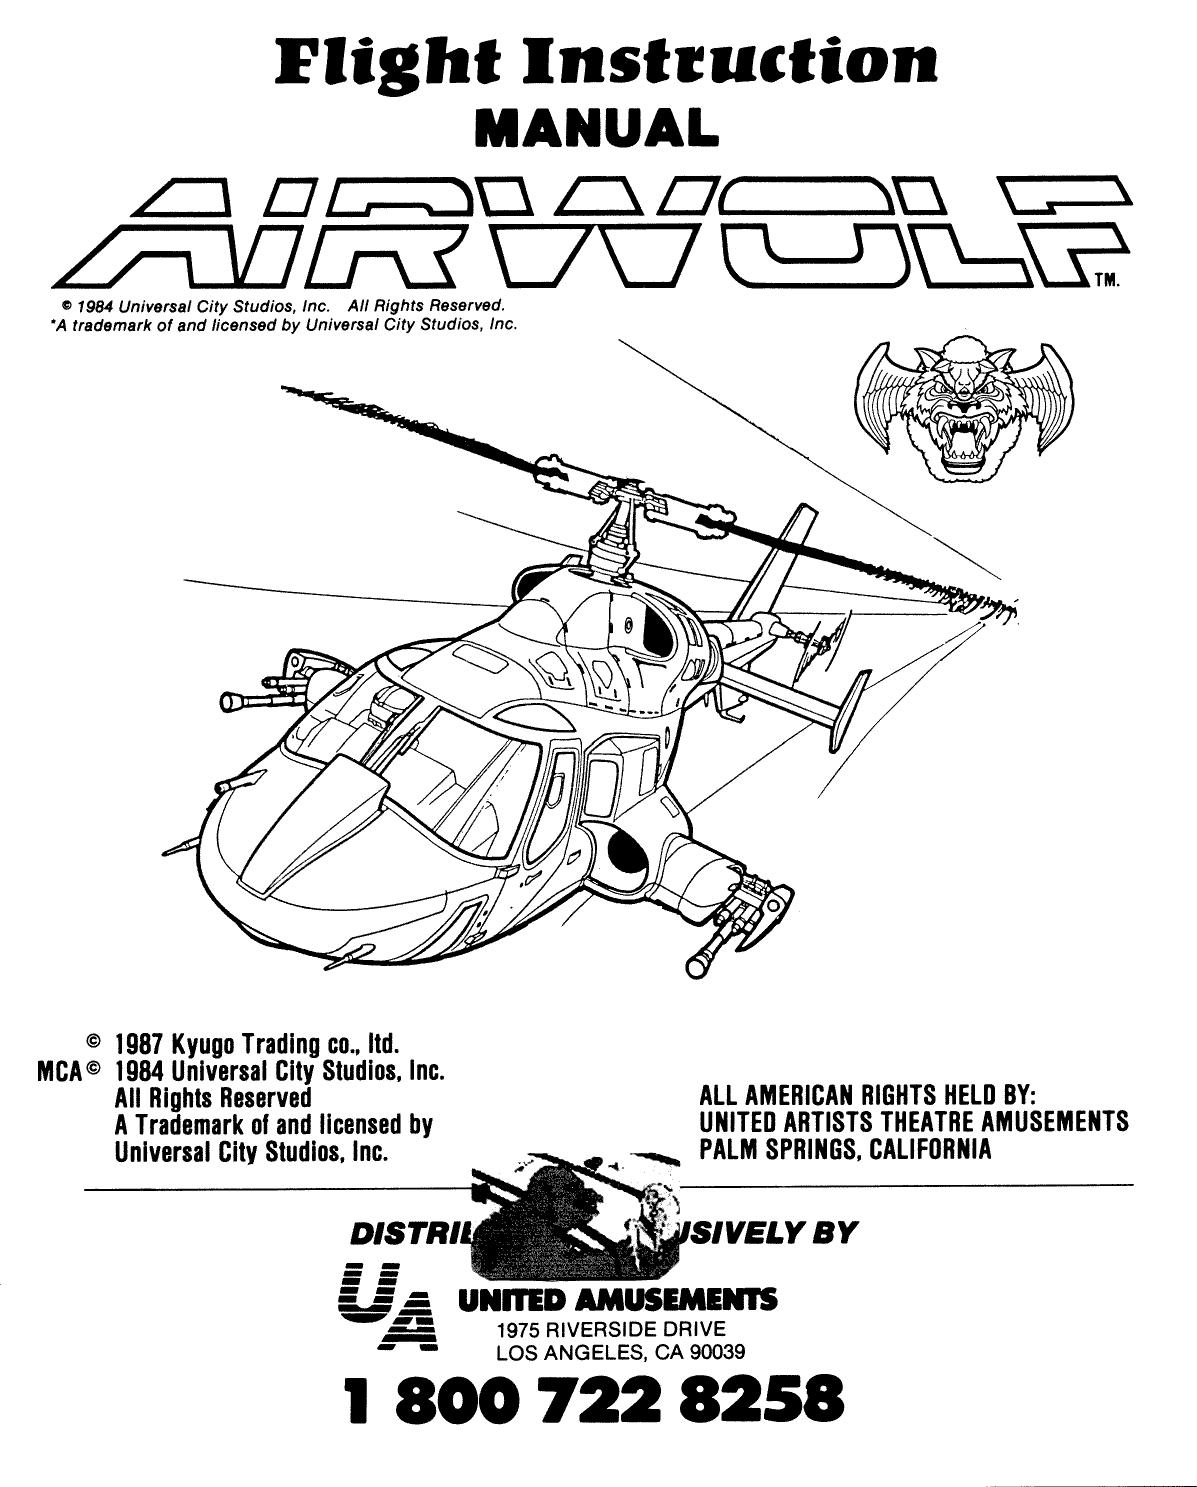 Airwolf Manual